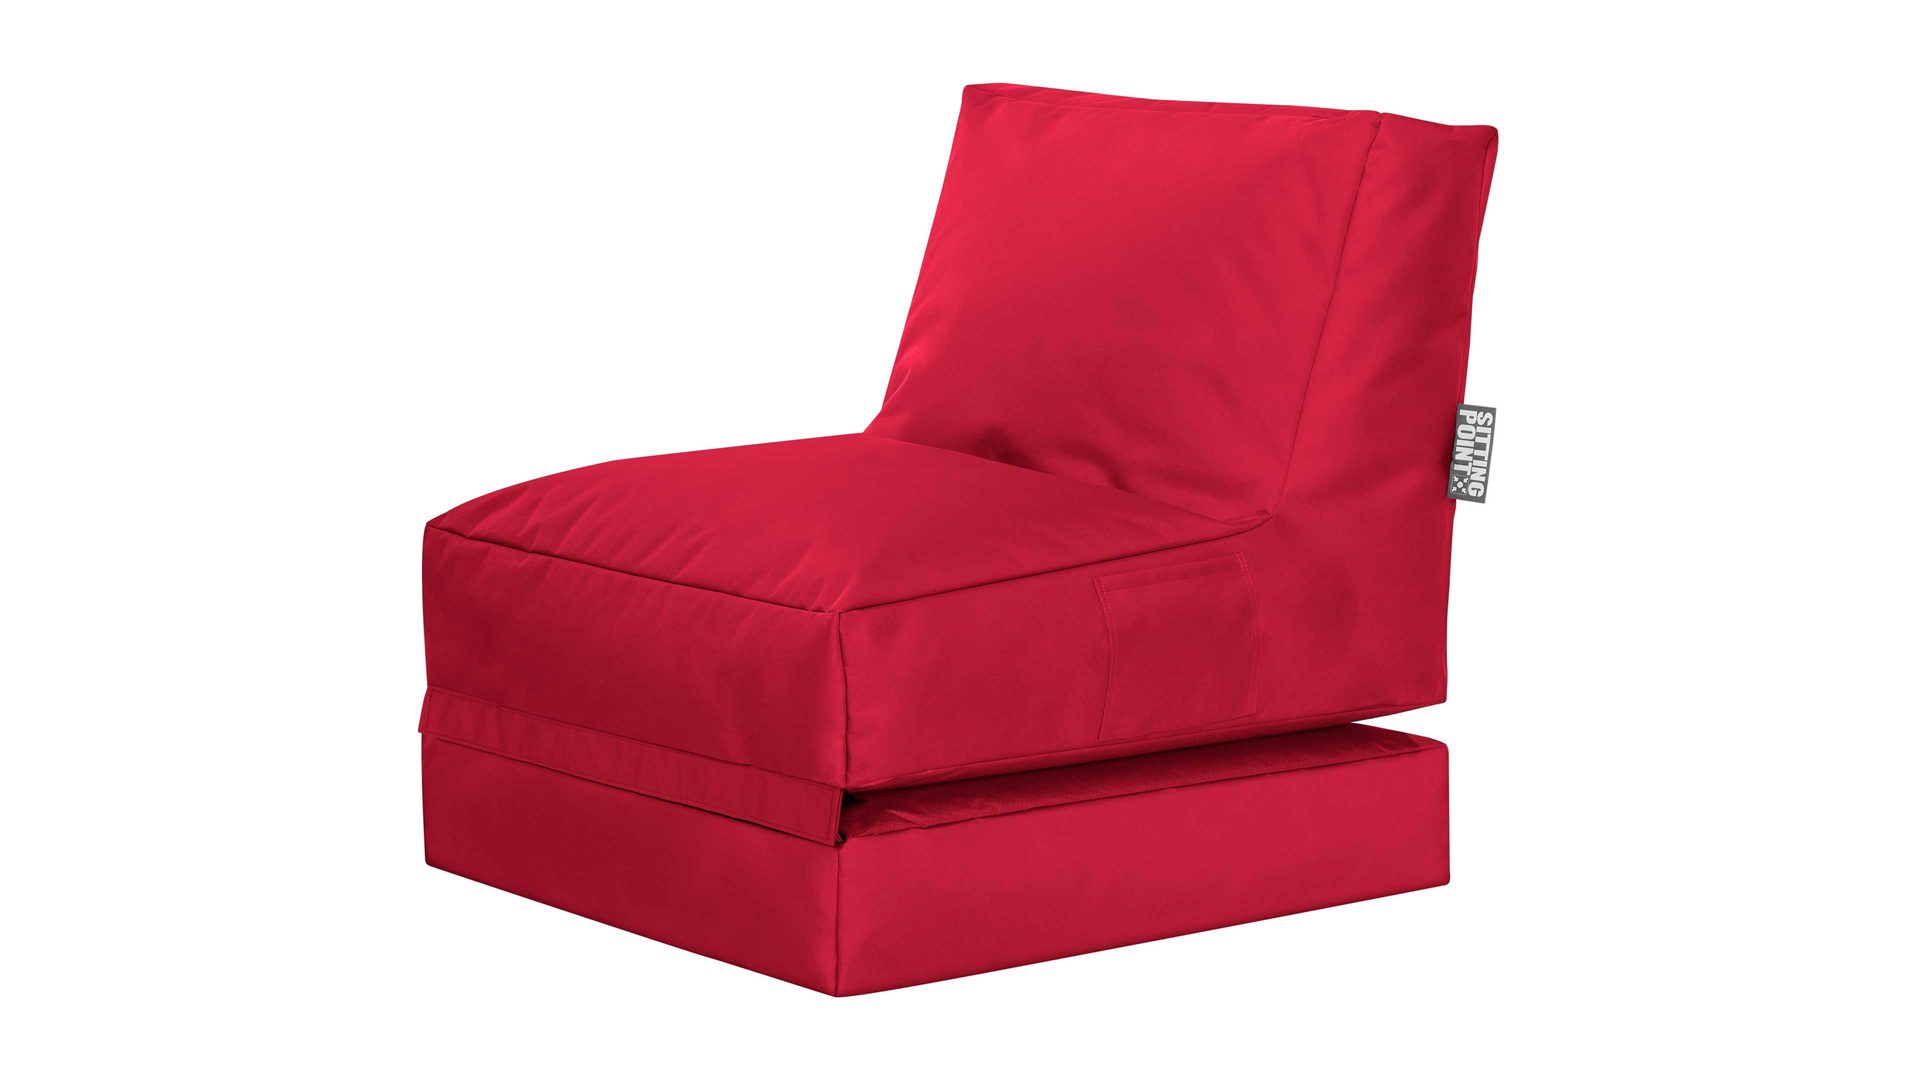 Sitzsack-Liege Magma sitting point aus Kunstfaser in Rot SITTING POINT Funktions-Sitzsack Twist Scuba roter Kunstfaserbezug - ca. 300 Liter